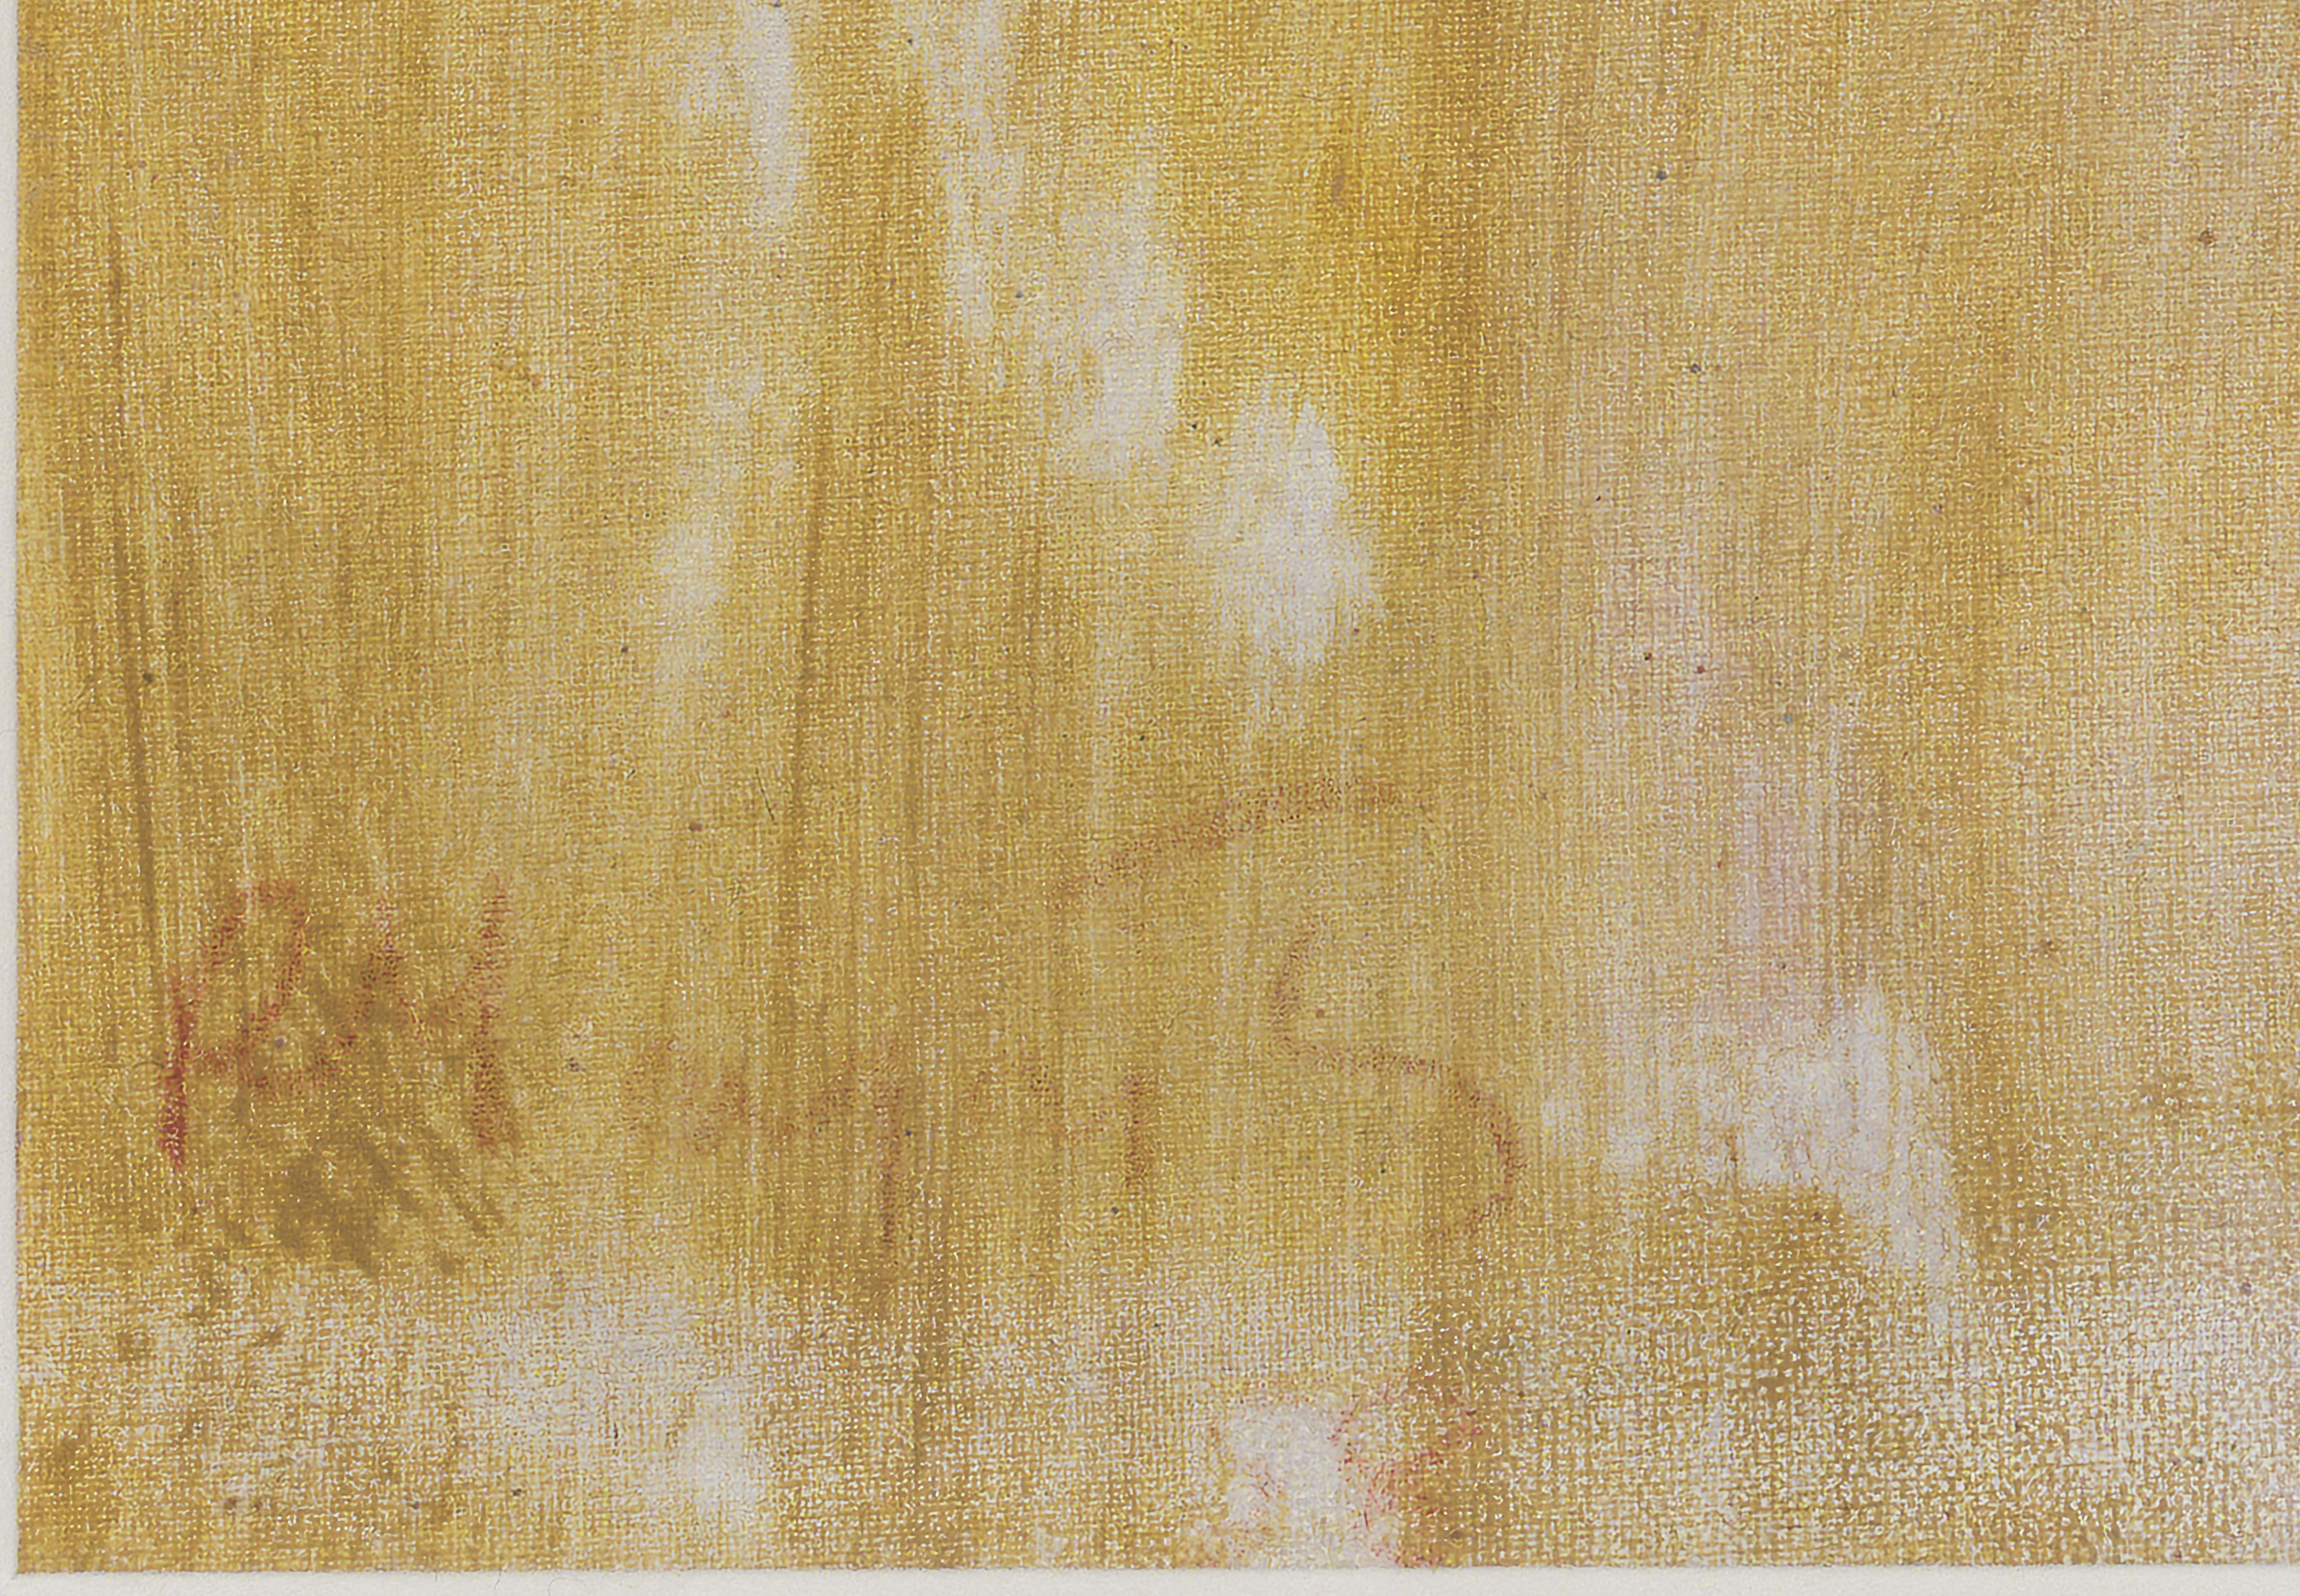 Richard Sagrits “Seisev akt”, 1958. 47 x 32 cm.